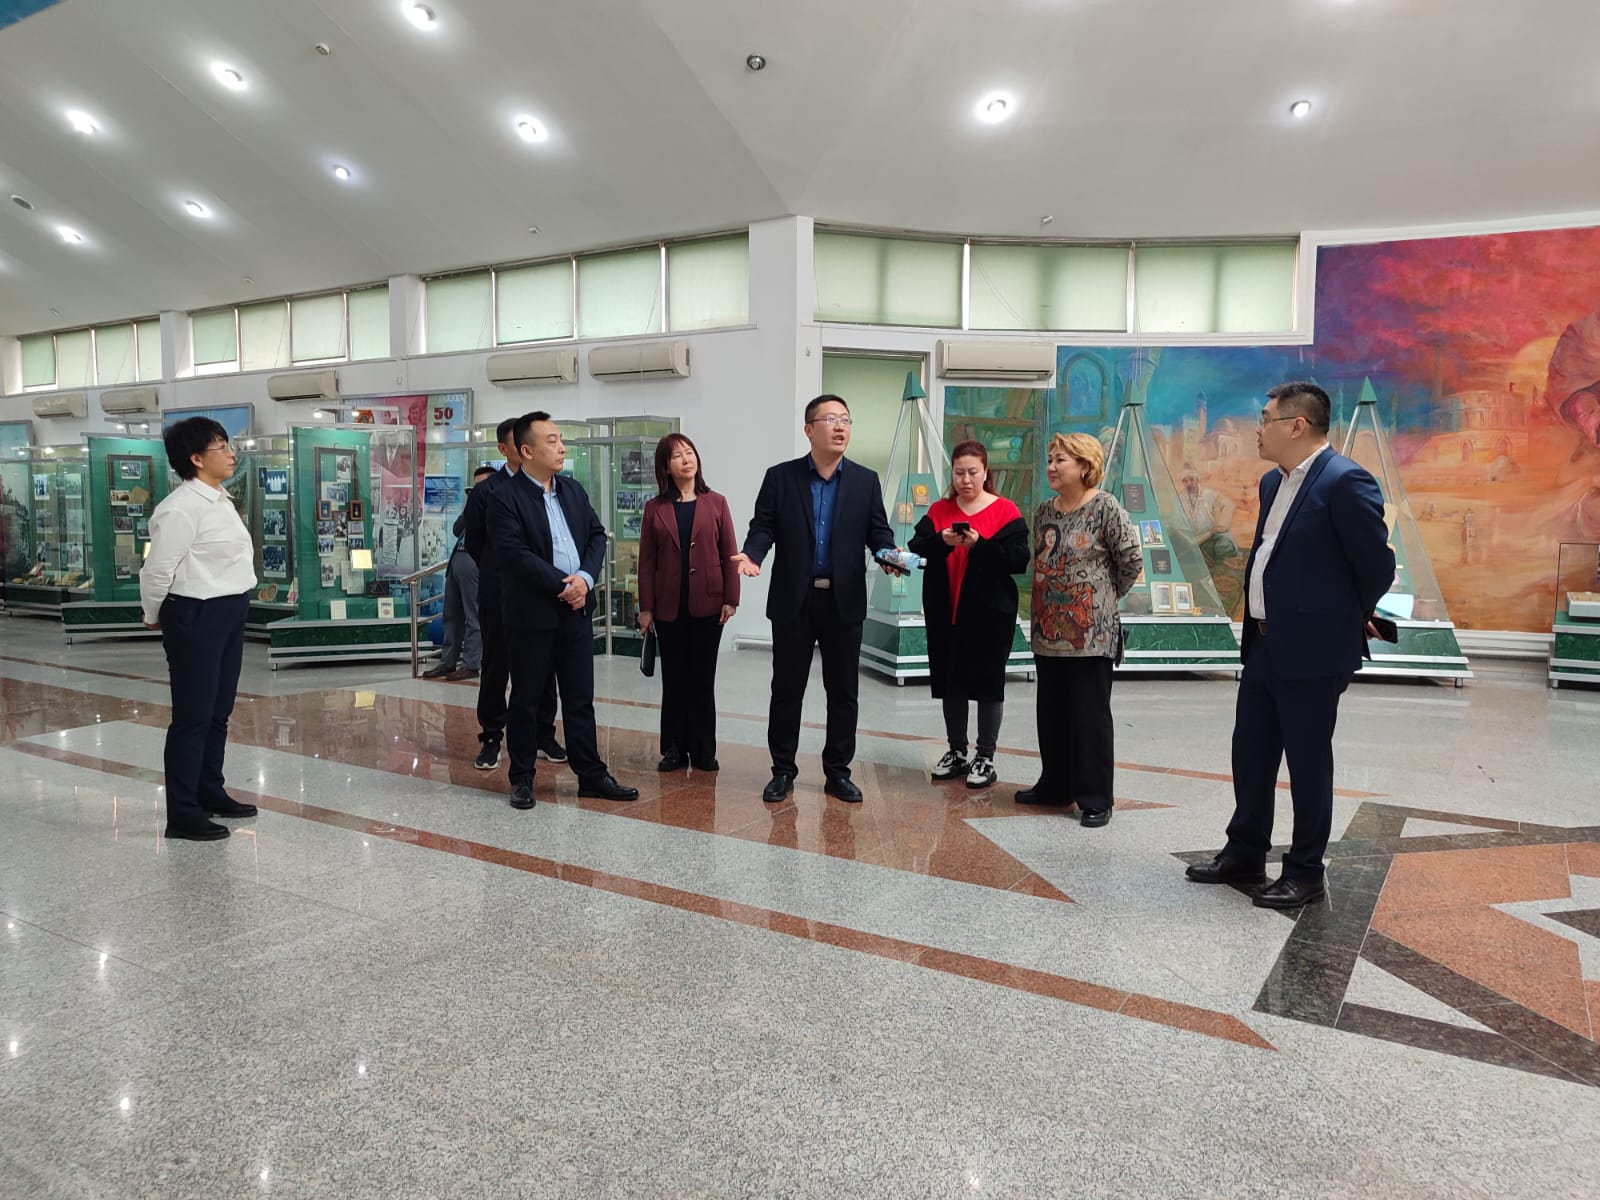 Kazakhstan-China joint laboratory "Remote Sensing Technology and Applications" was opened at Al-Farabi Kazakh National University